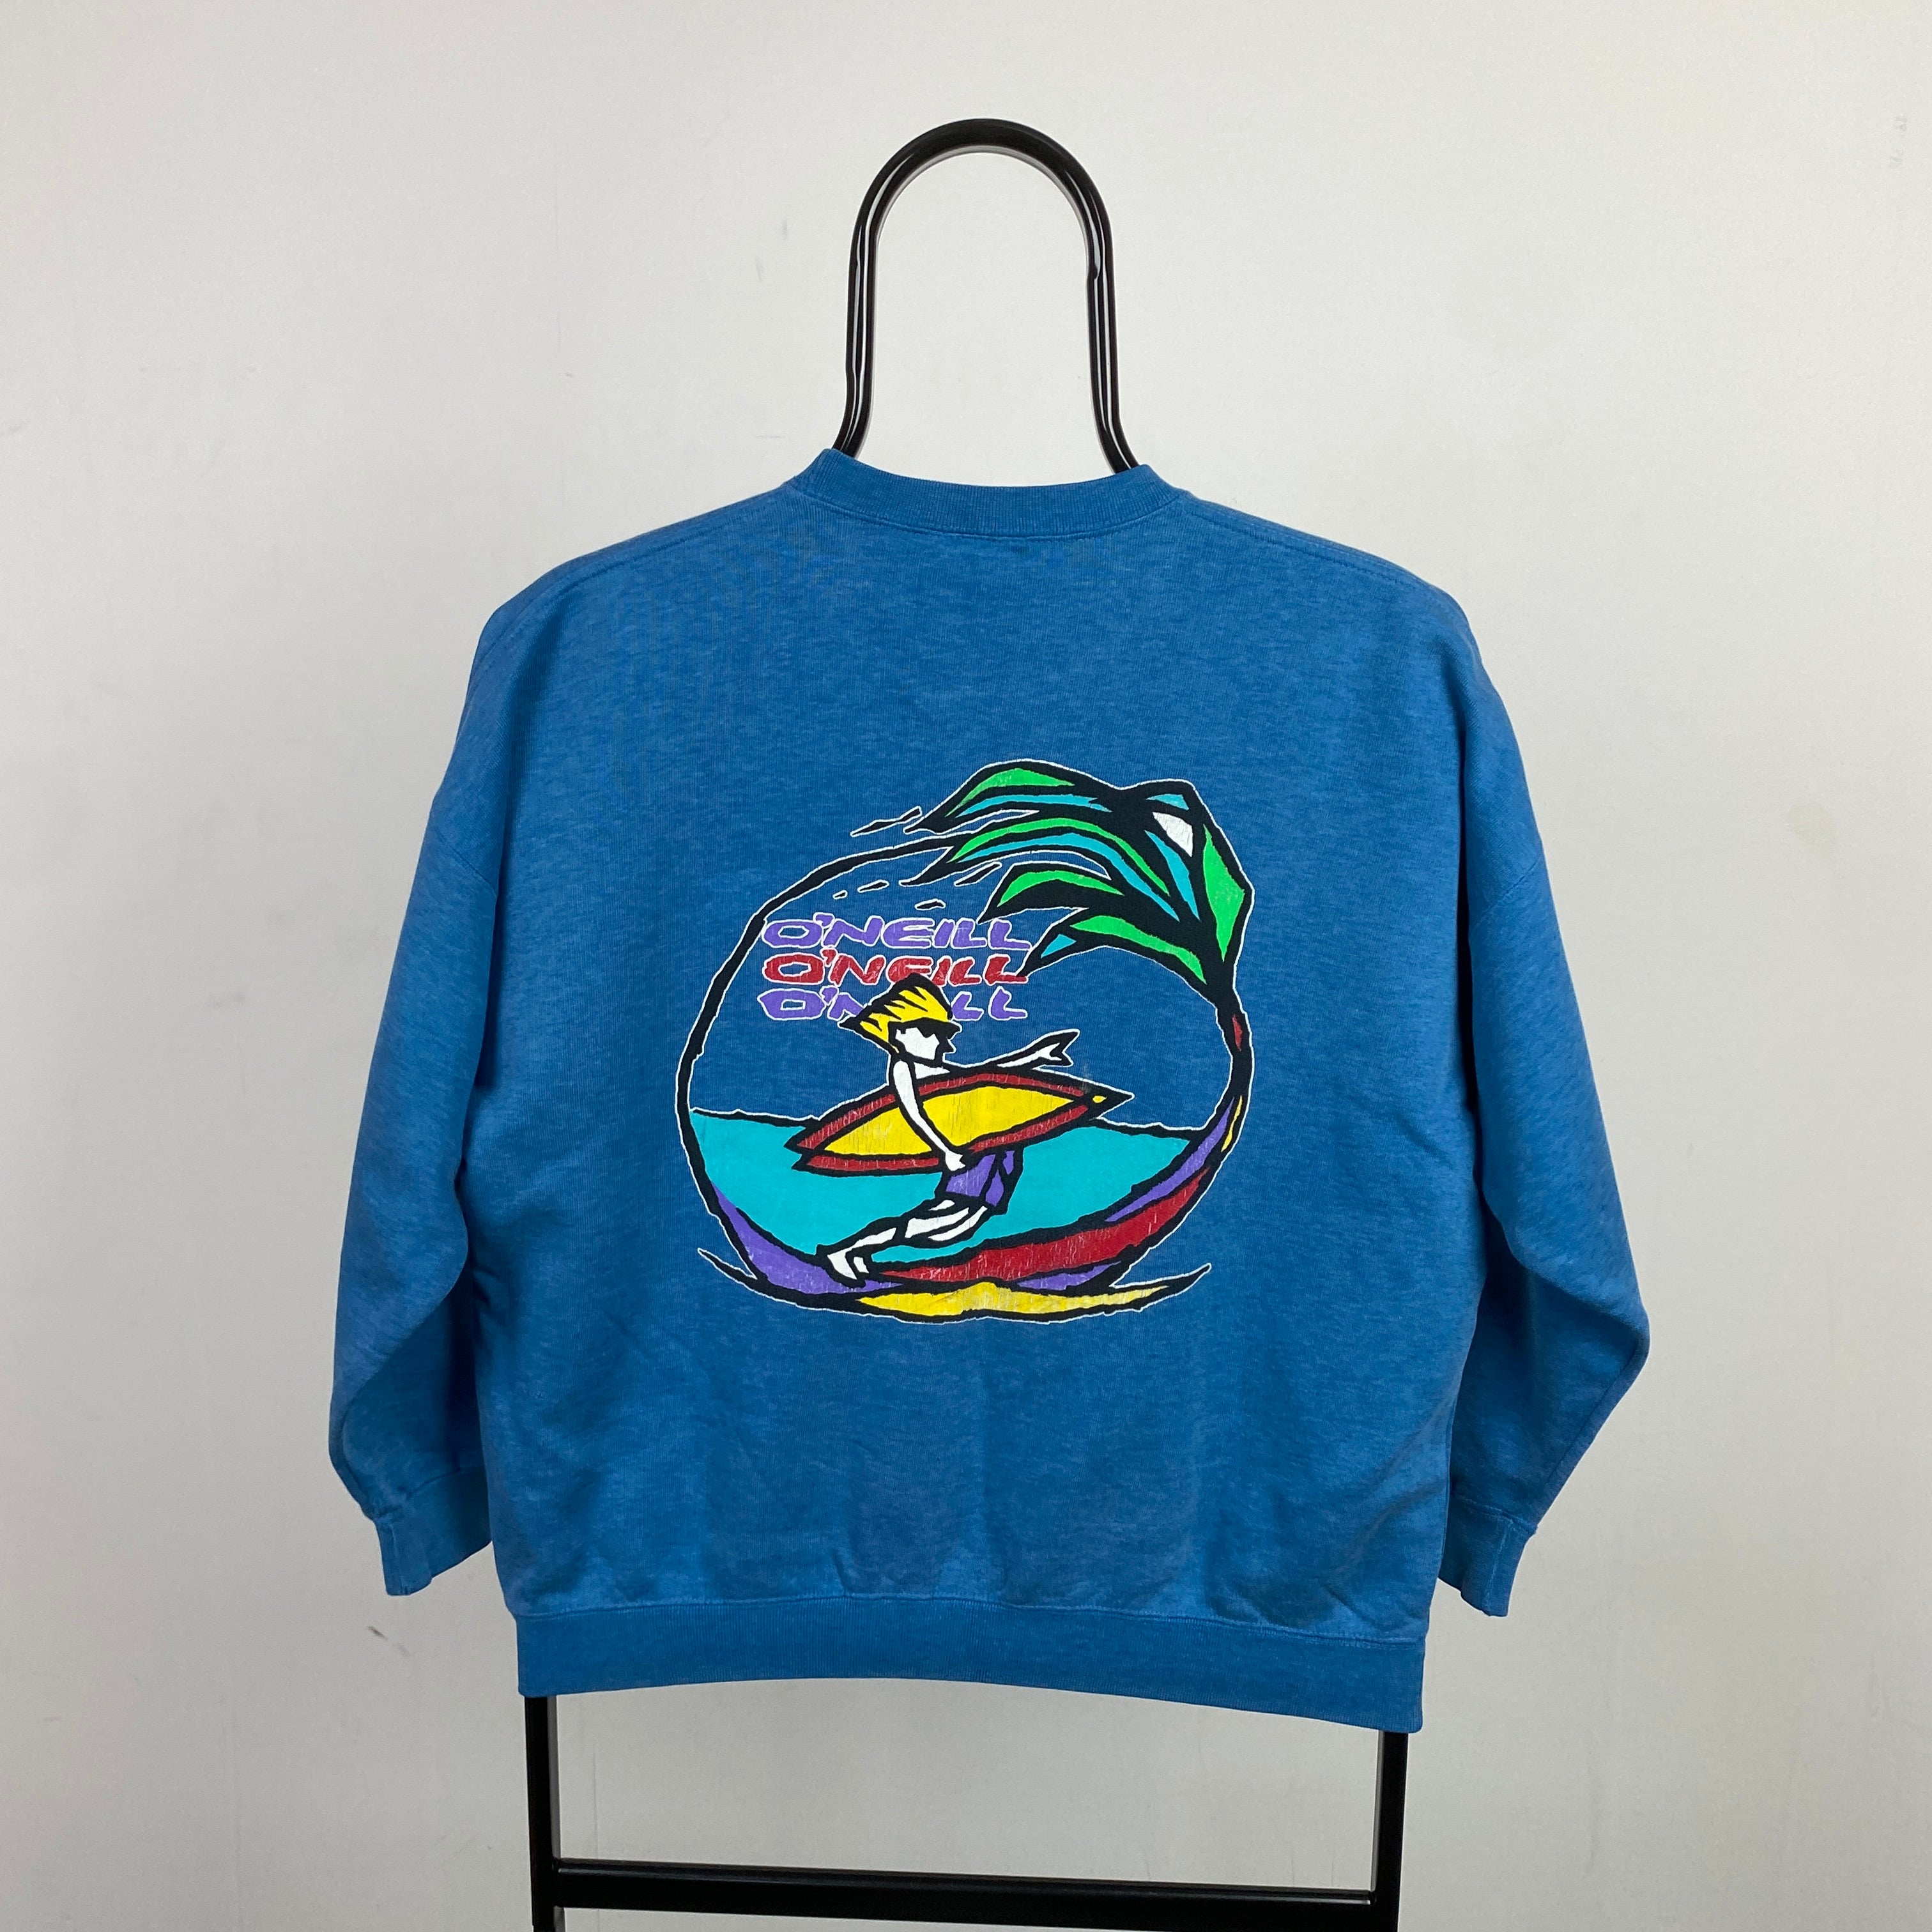 Retro O’Neill Surf Sweatshirt Blue XS